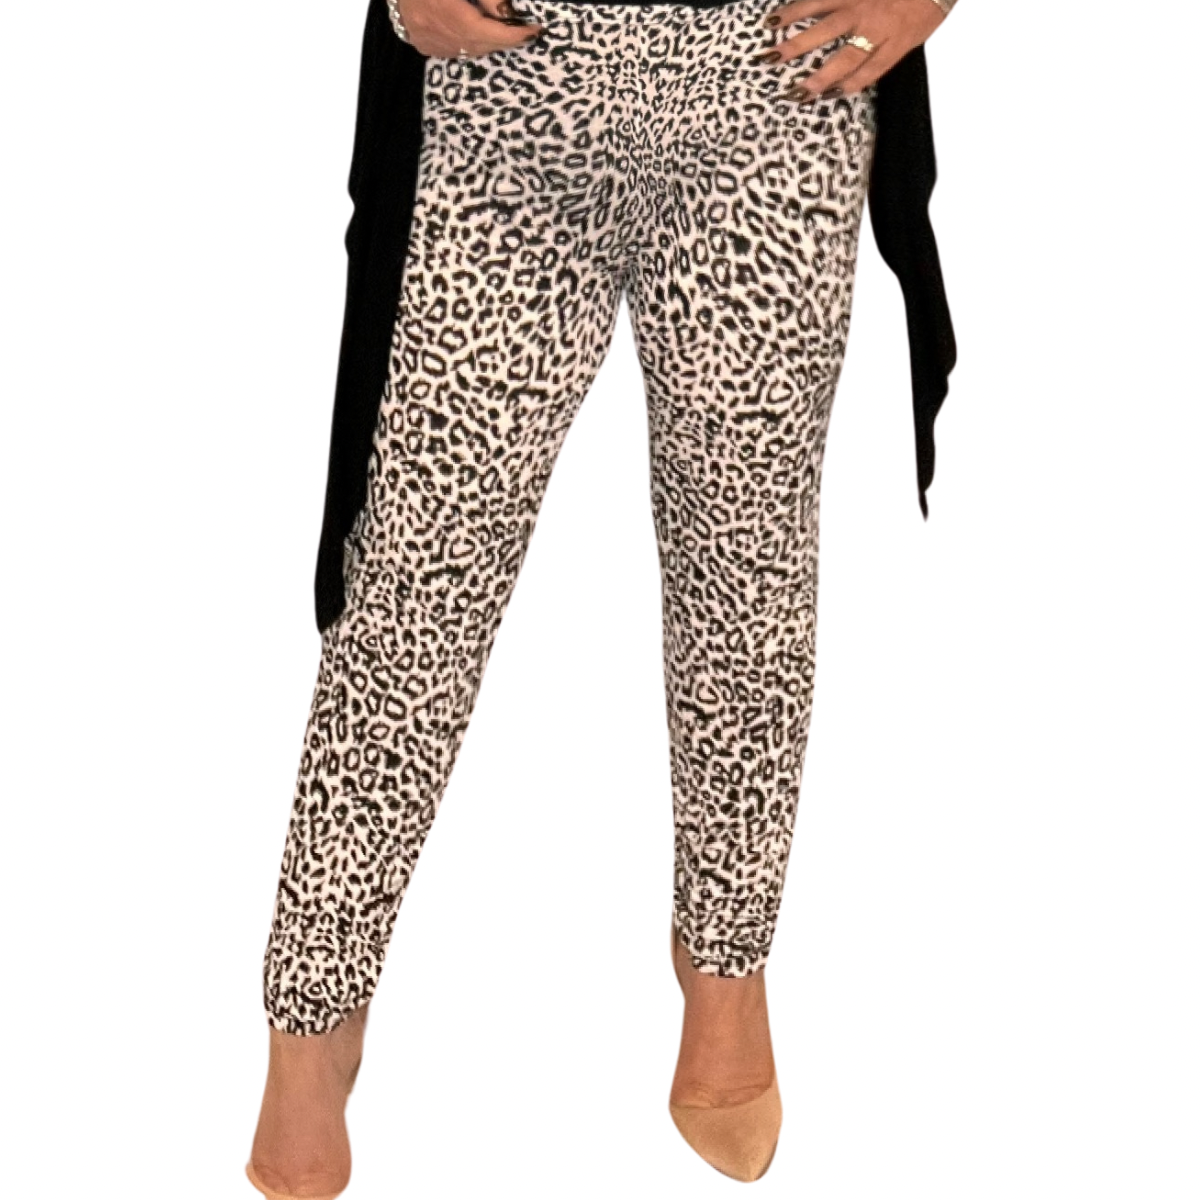 ZLJUS Women Leopard Print Leggings No Transparent High Knee